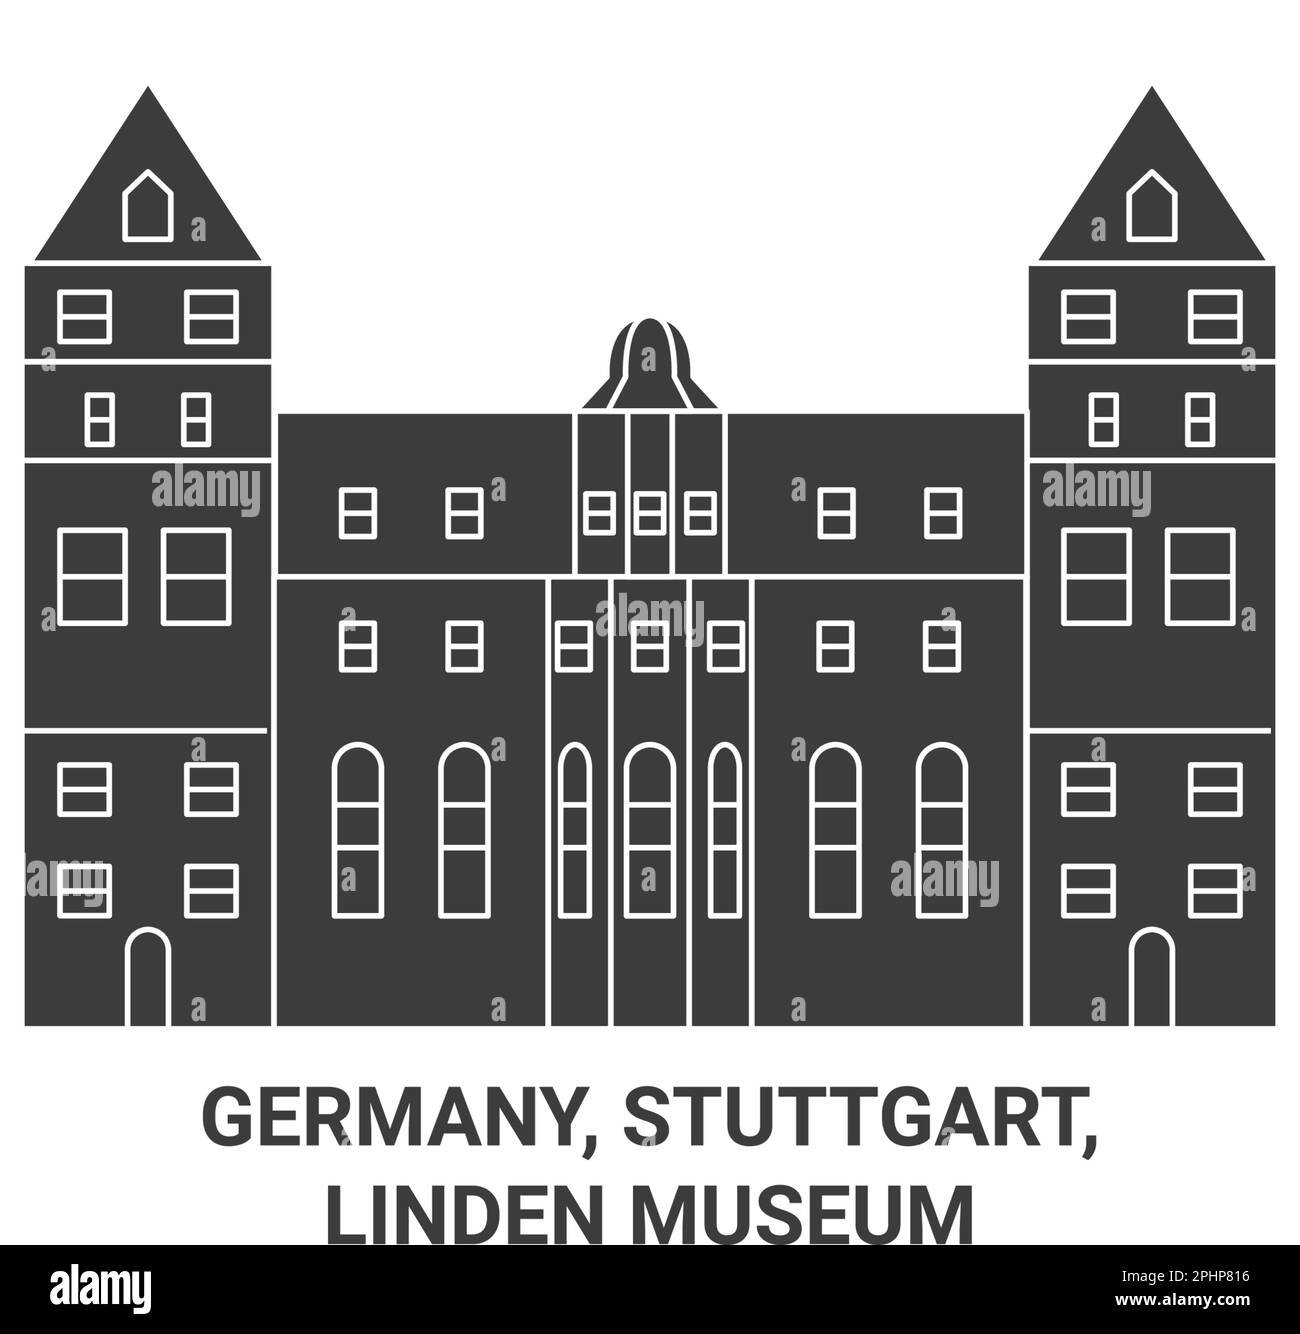 Germany, Stuttgart, Linden Museum travel landmark vector illustration Stock Vector